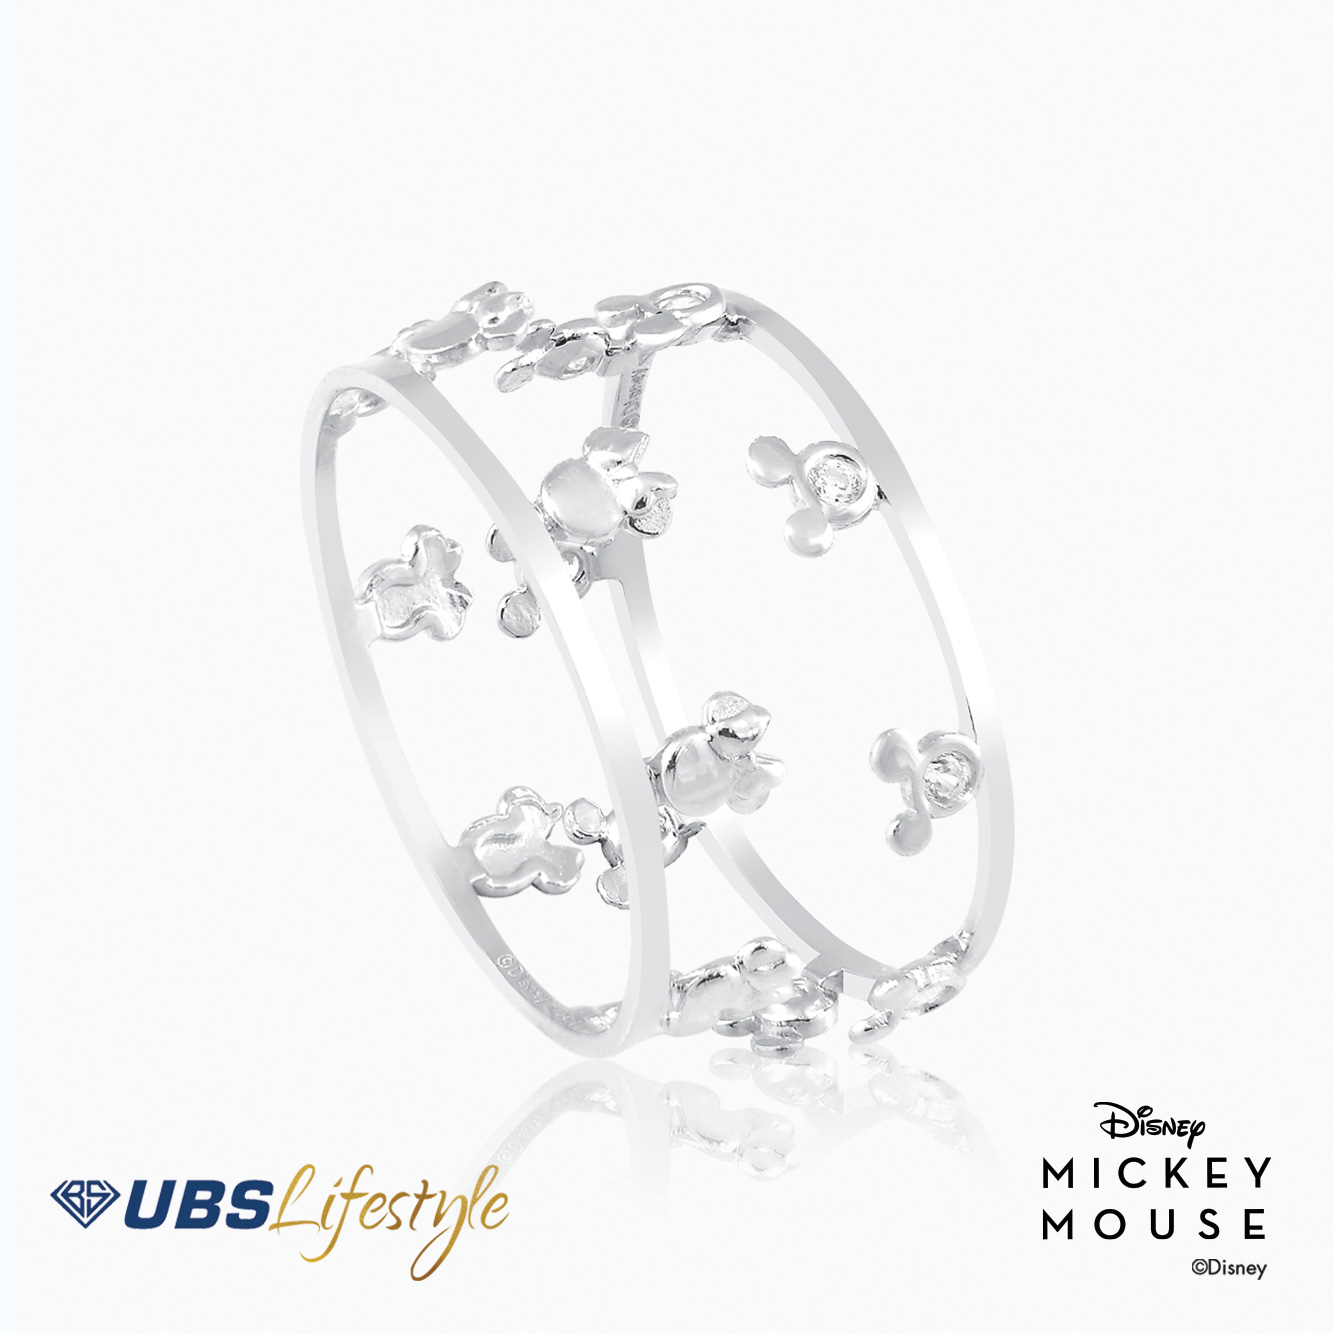 UBS Cincin Emas Disney Mickey Mouse - Ccy0114 - 17K